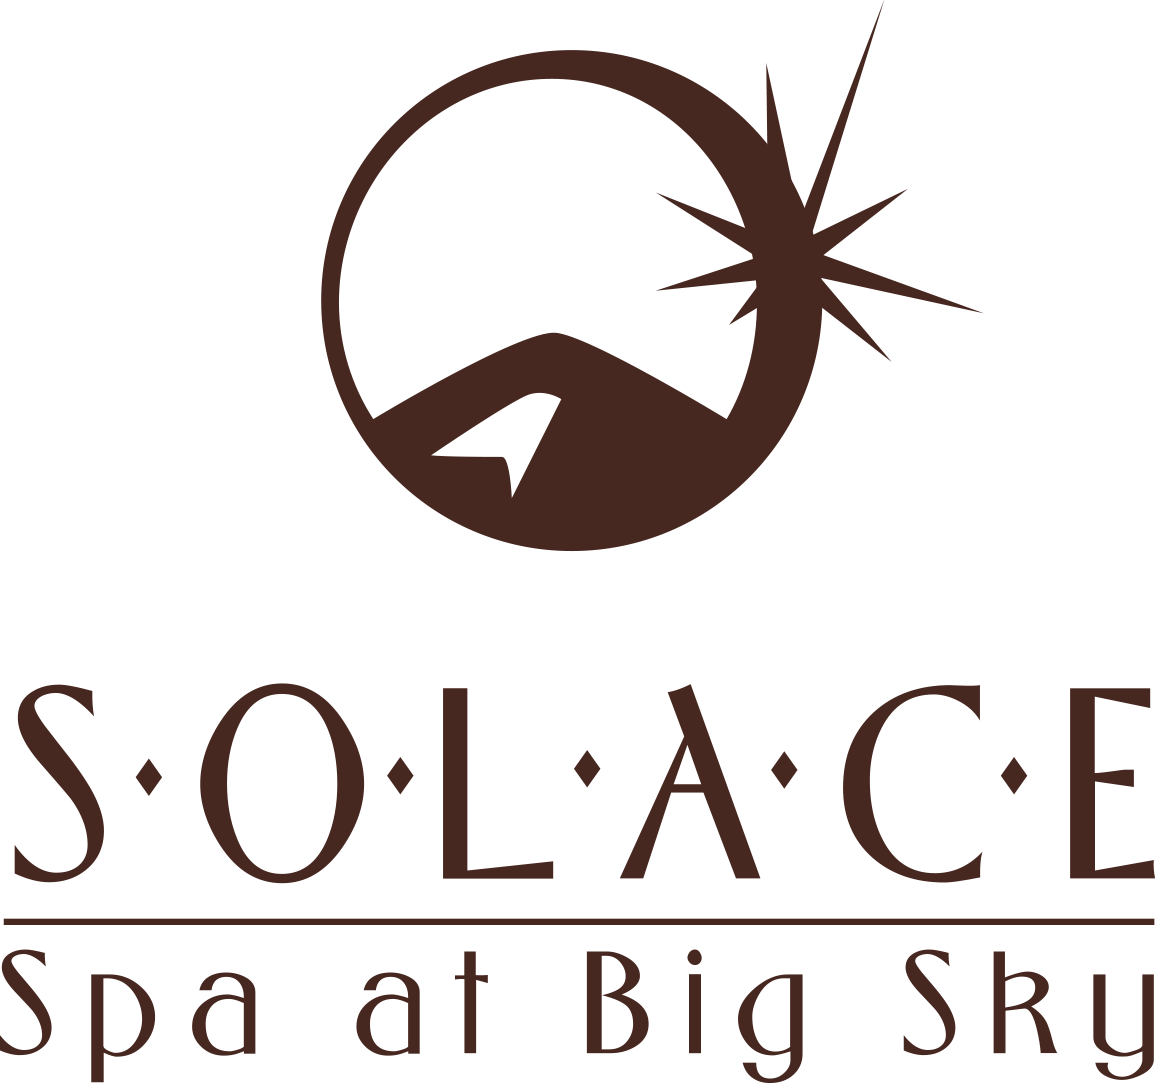 Solace Spa at Big Sky